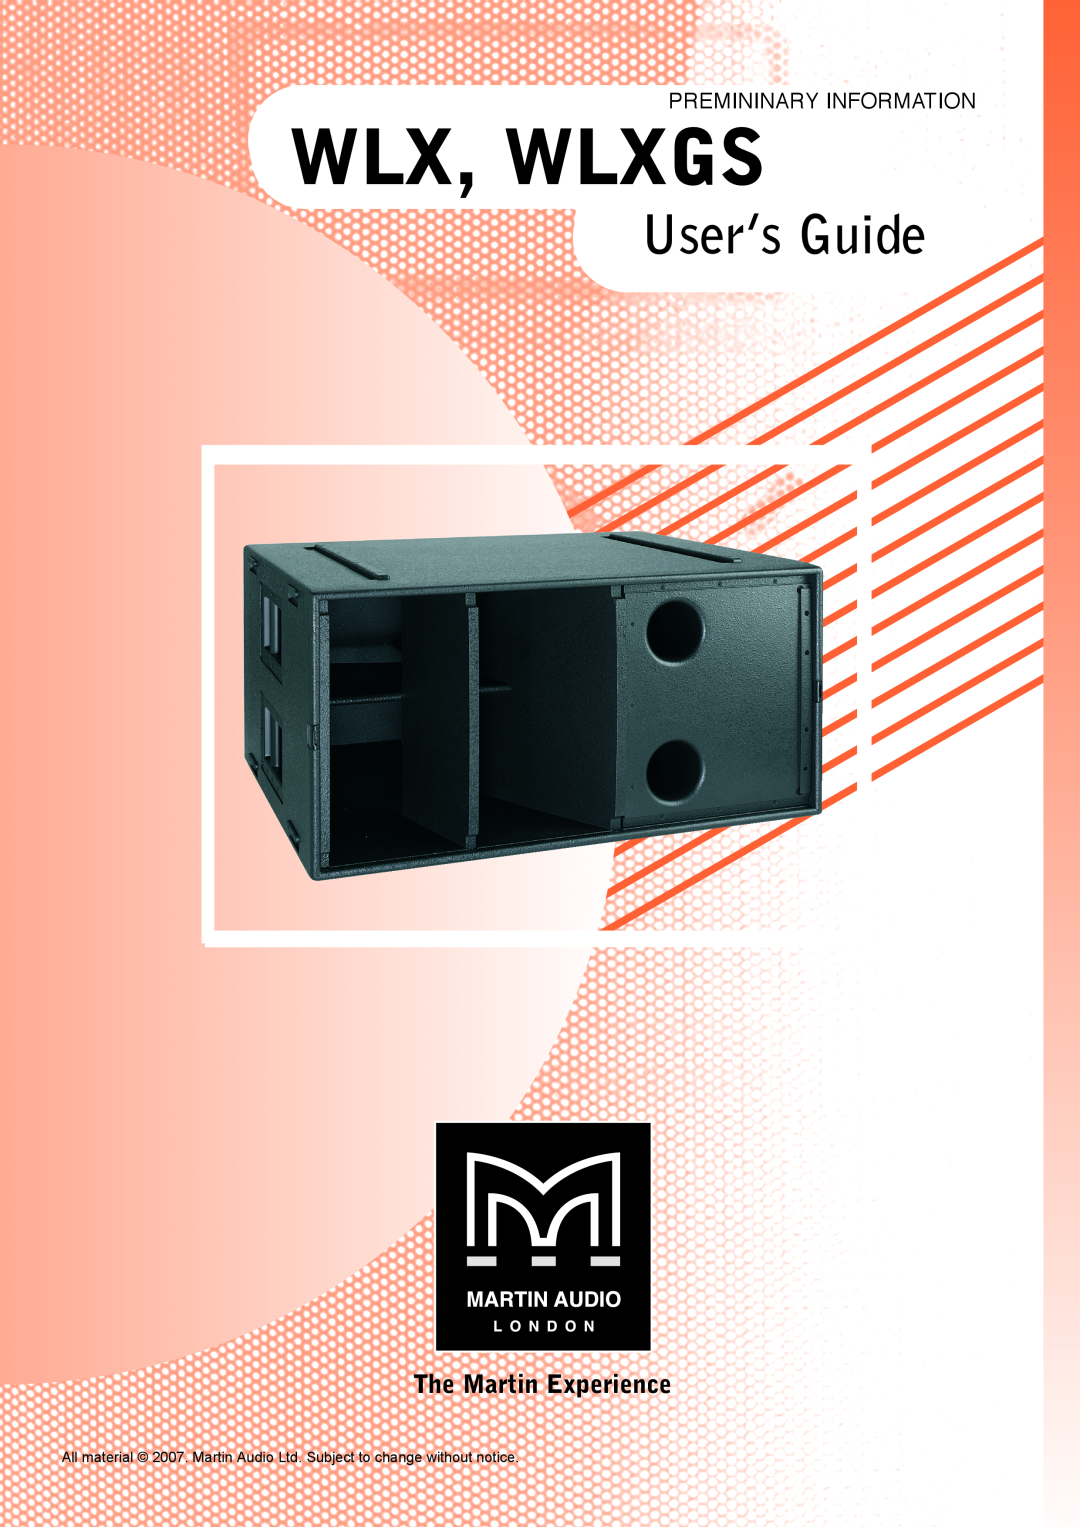 Martin Audio WLXGS manual Wlx, Wlxgs, User’s Guide, The Martin Experience, Premininary Information 